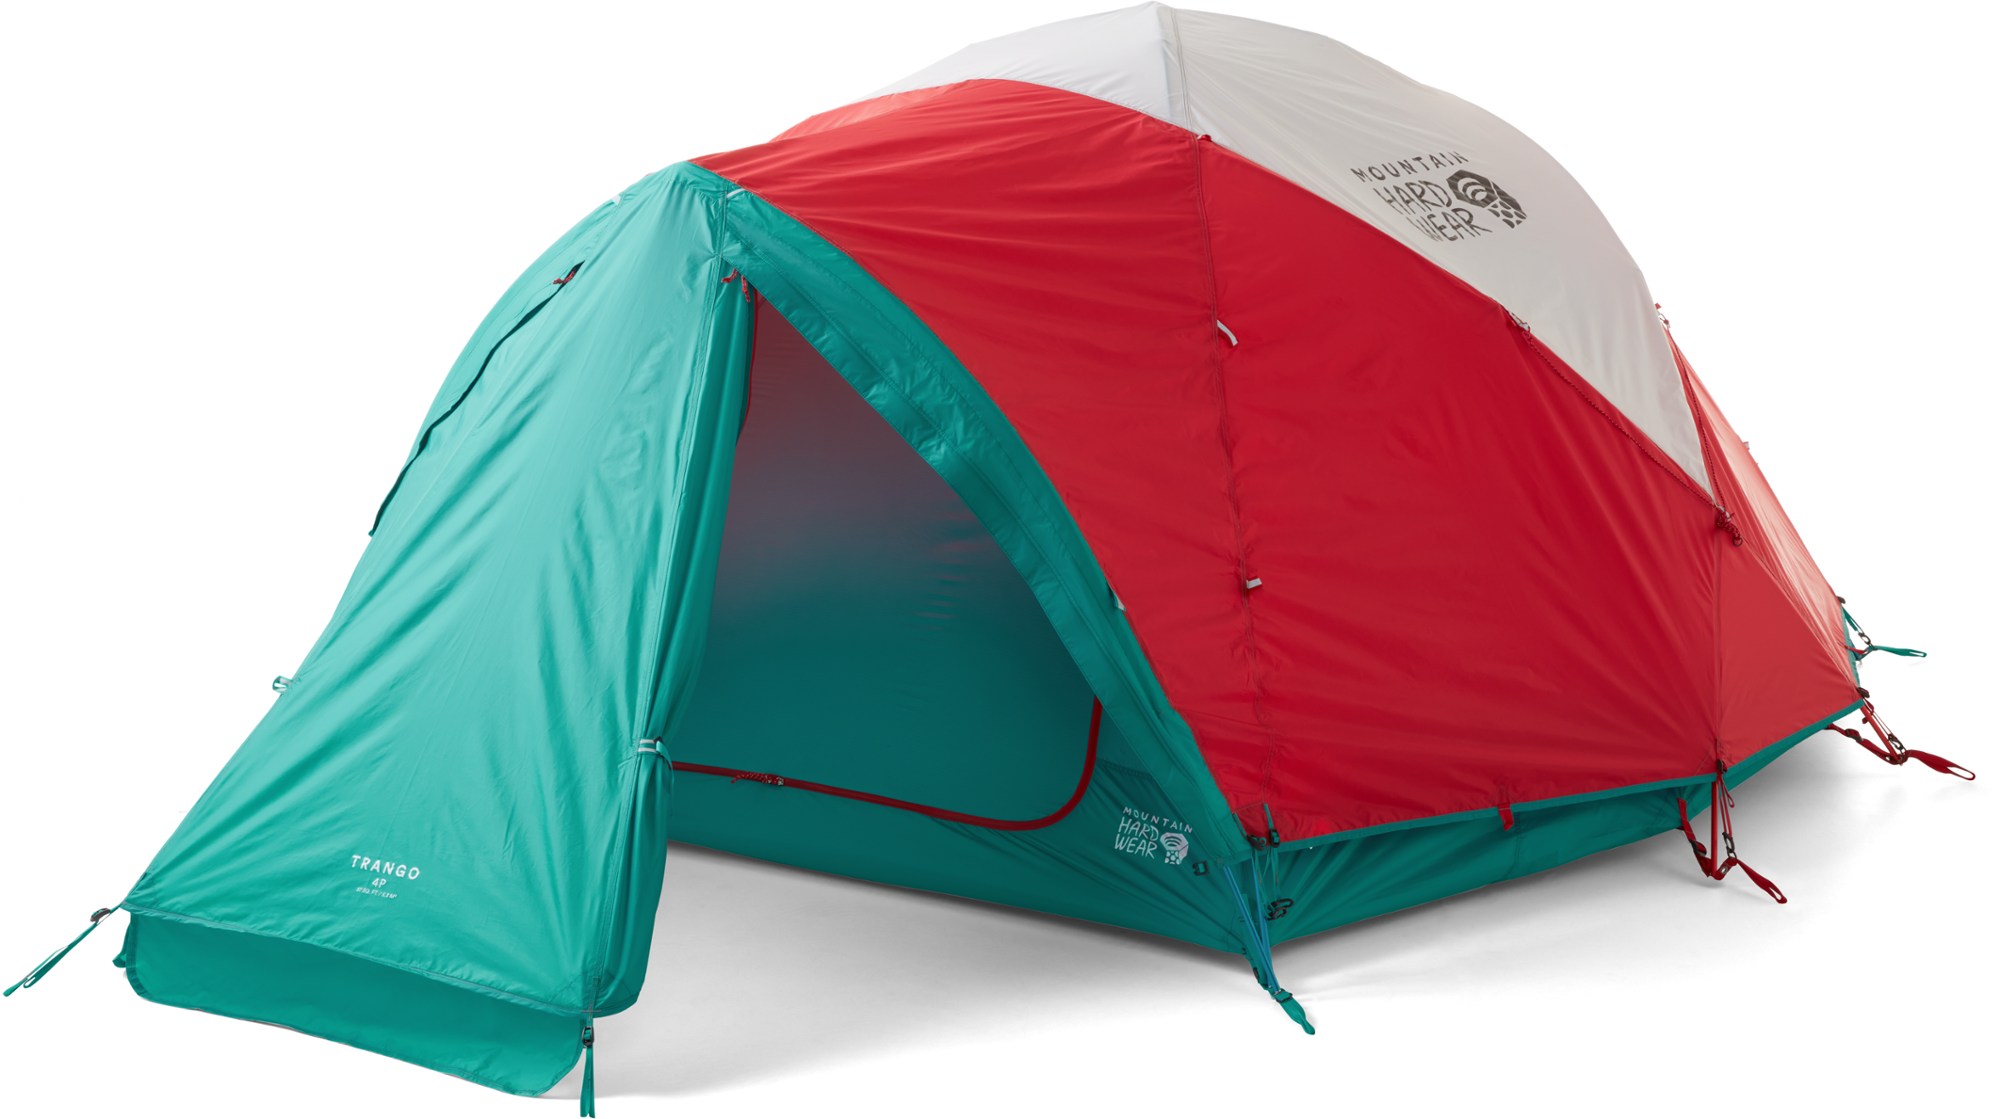 Палатка Транго 4 Mountain Hardwear, красный